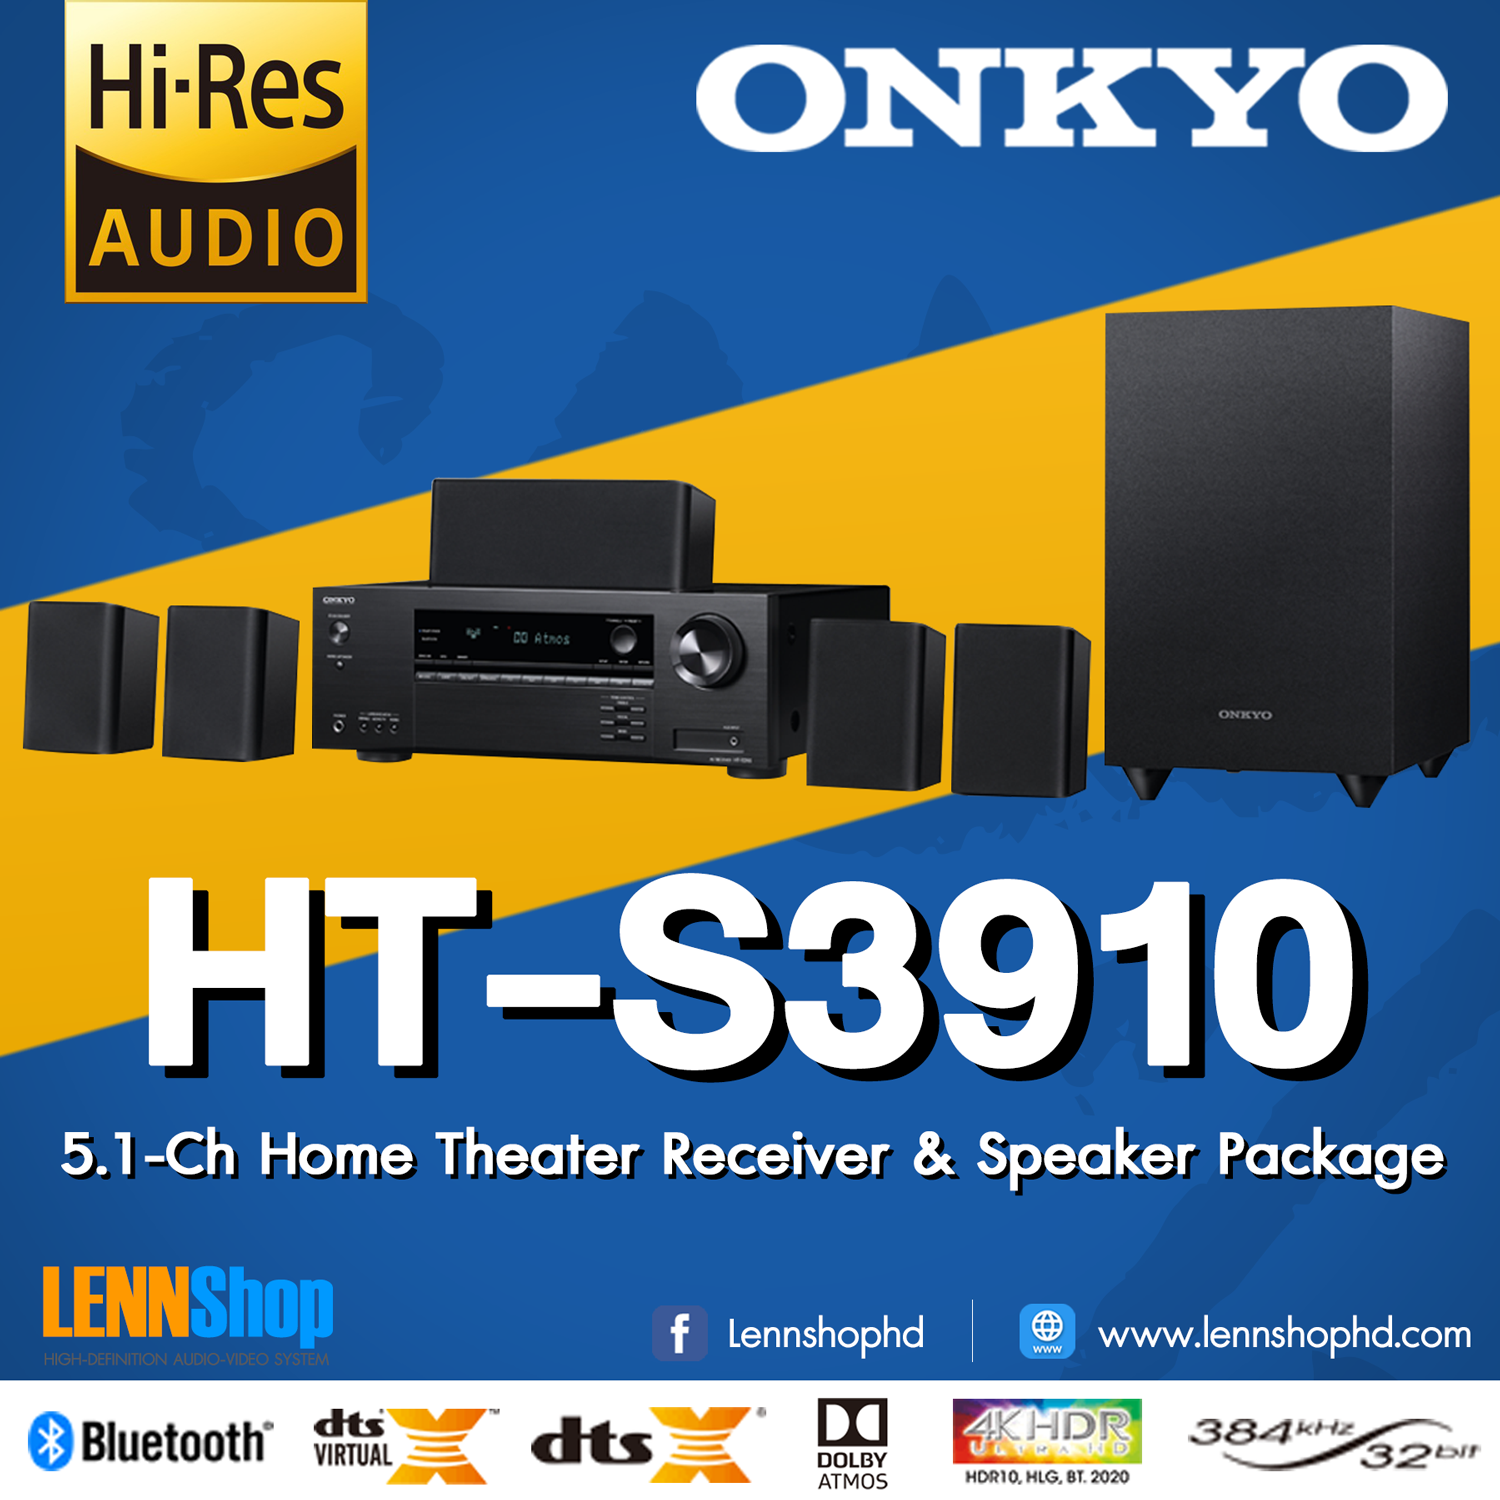 ONKYO HT-S3910 5.1-Ch Home Theater แอมป์พร้อมชุดลำโพง 5.1 ระบบเสียงล่าสุด Dolby Atmos / DTSX Onkyo 3910 รับประกัน 3ปี ศูนย์ PowerBuy โดย LENNSHOP ตัวแทนจำหน่ายอย่างเป็นทางการ / Onkyo hts3910 / lennshop